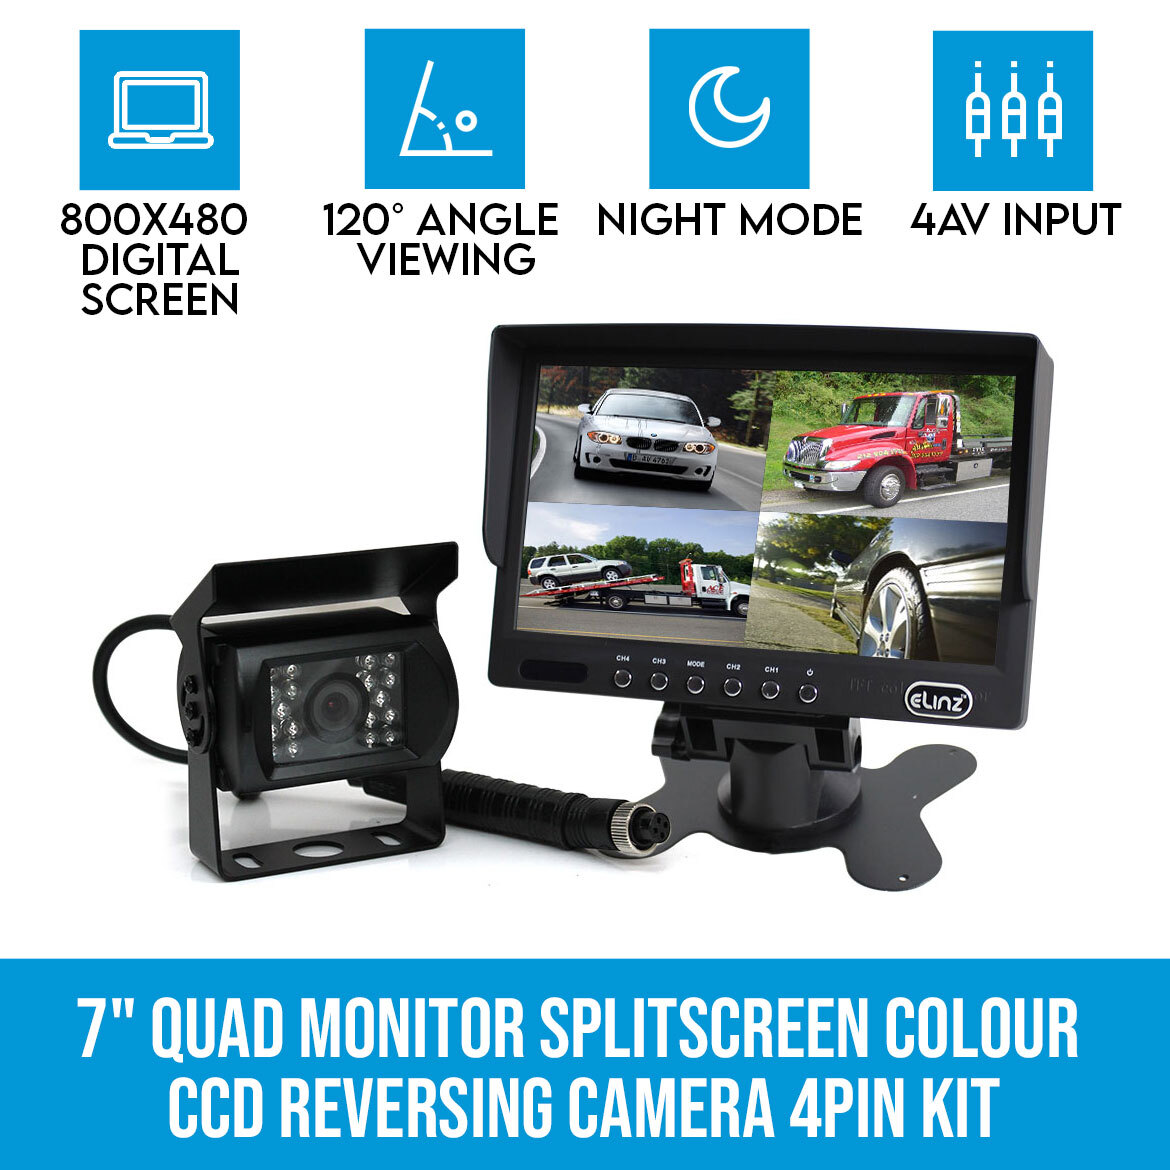 24V 12V 2 CCD Reversing Rear View Camera 4-PIN 7" Split QUAD Monitor Caravan Kit 